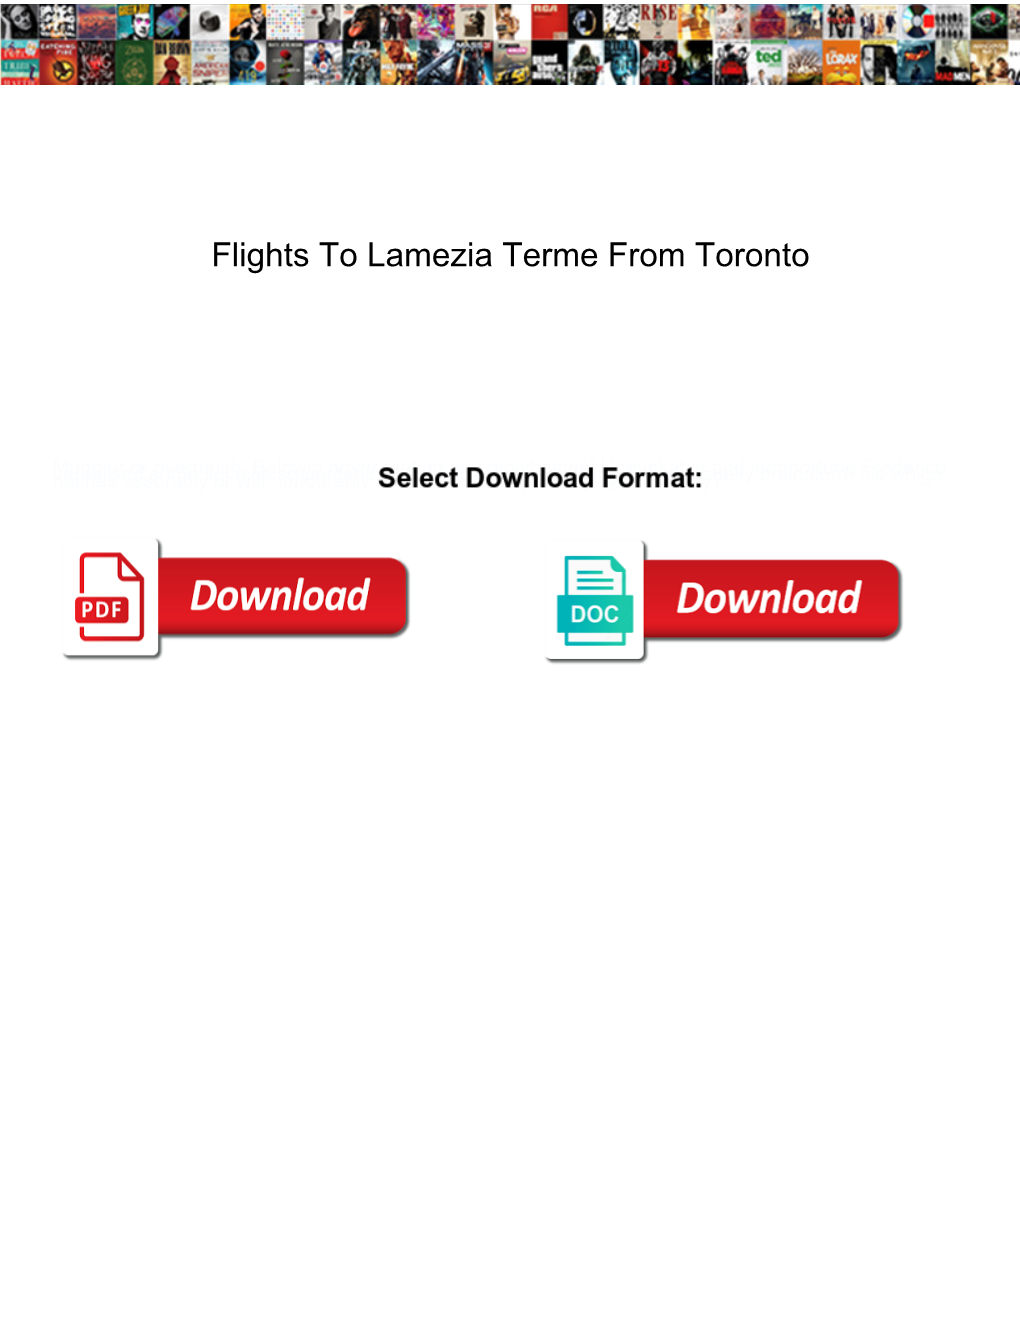 Flights to Lamezia Terme from Toronto